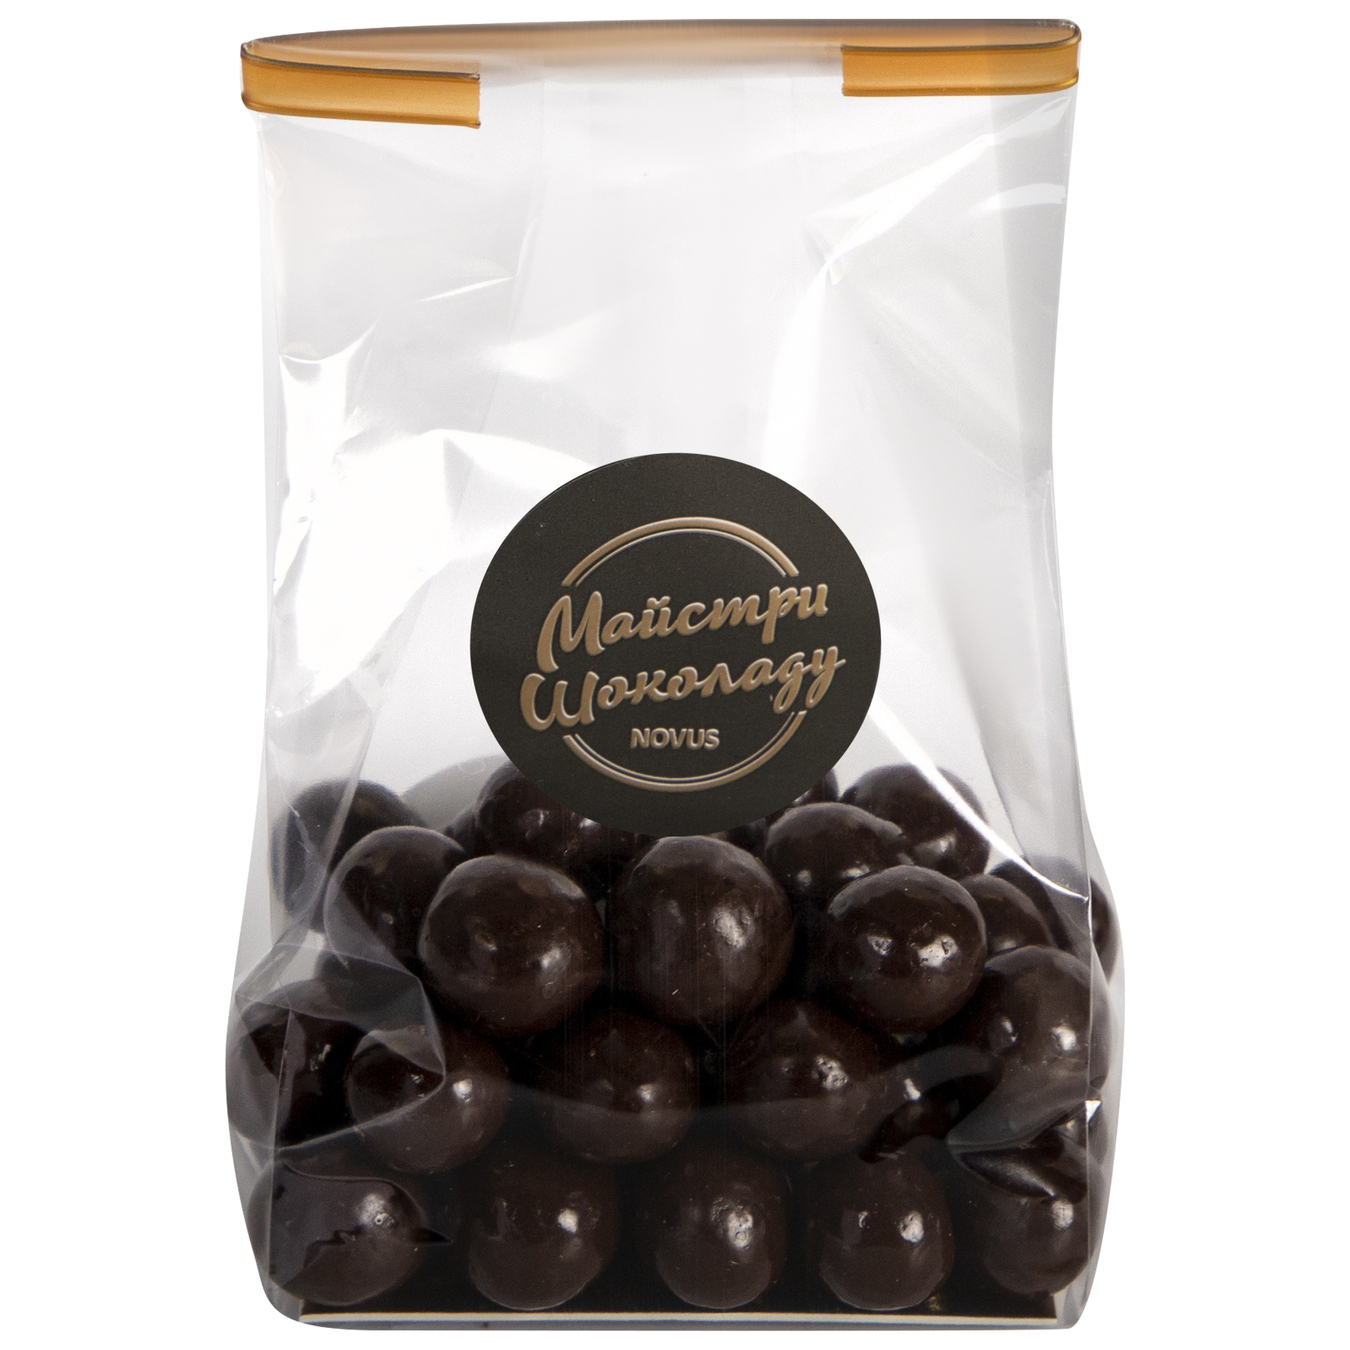 Masters of Chocolate Hazelnuts in dark chocolate 2